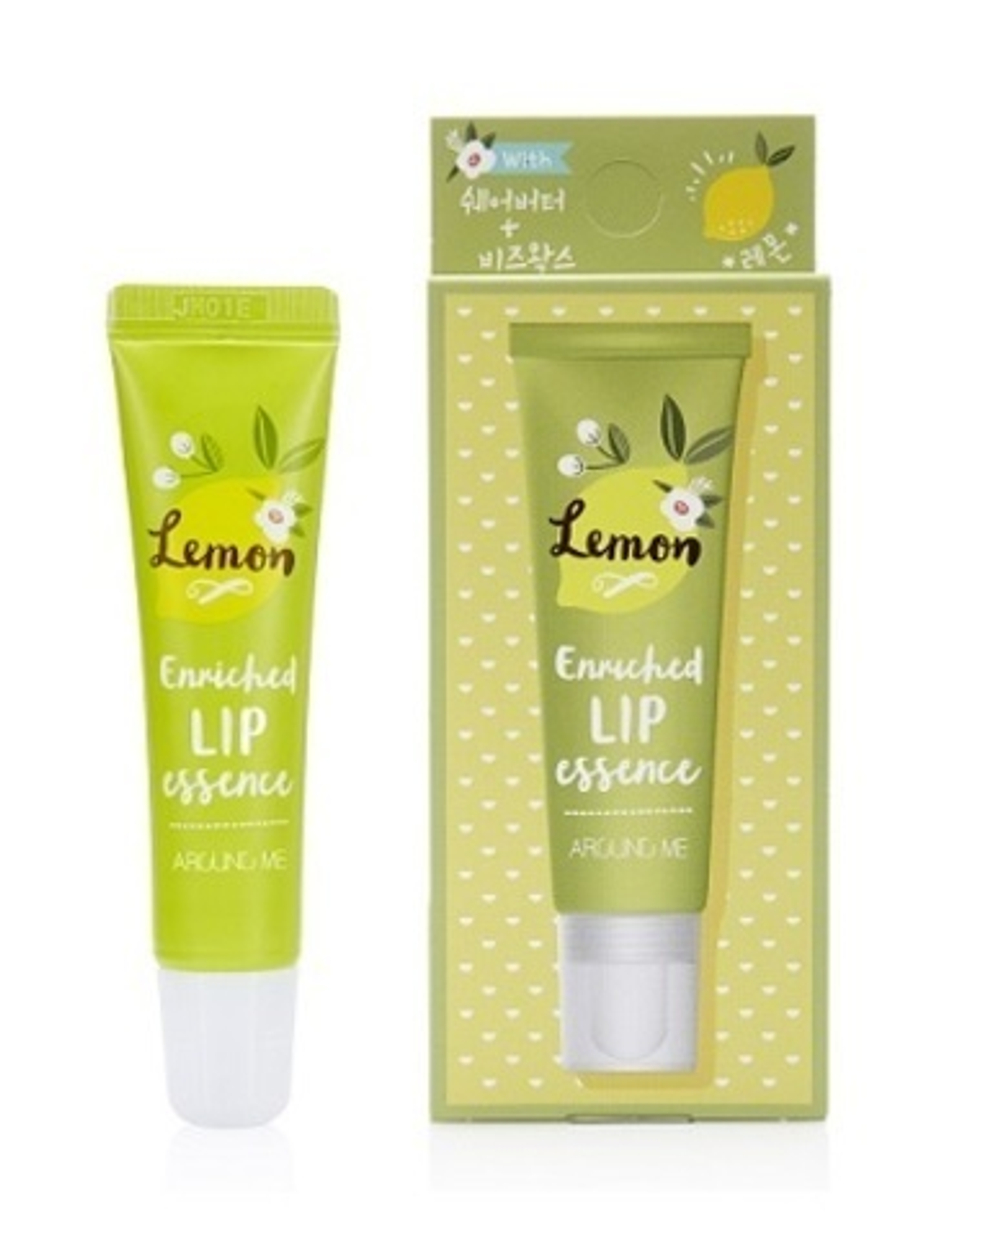 Welcos Around me enriched lip essence Lemon эссенция для губ. Лимон.